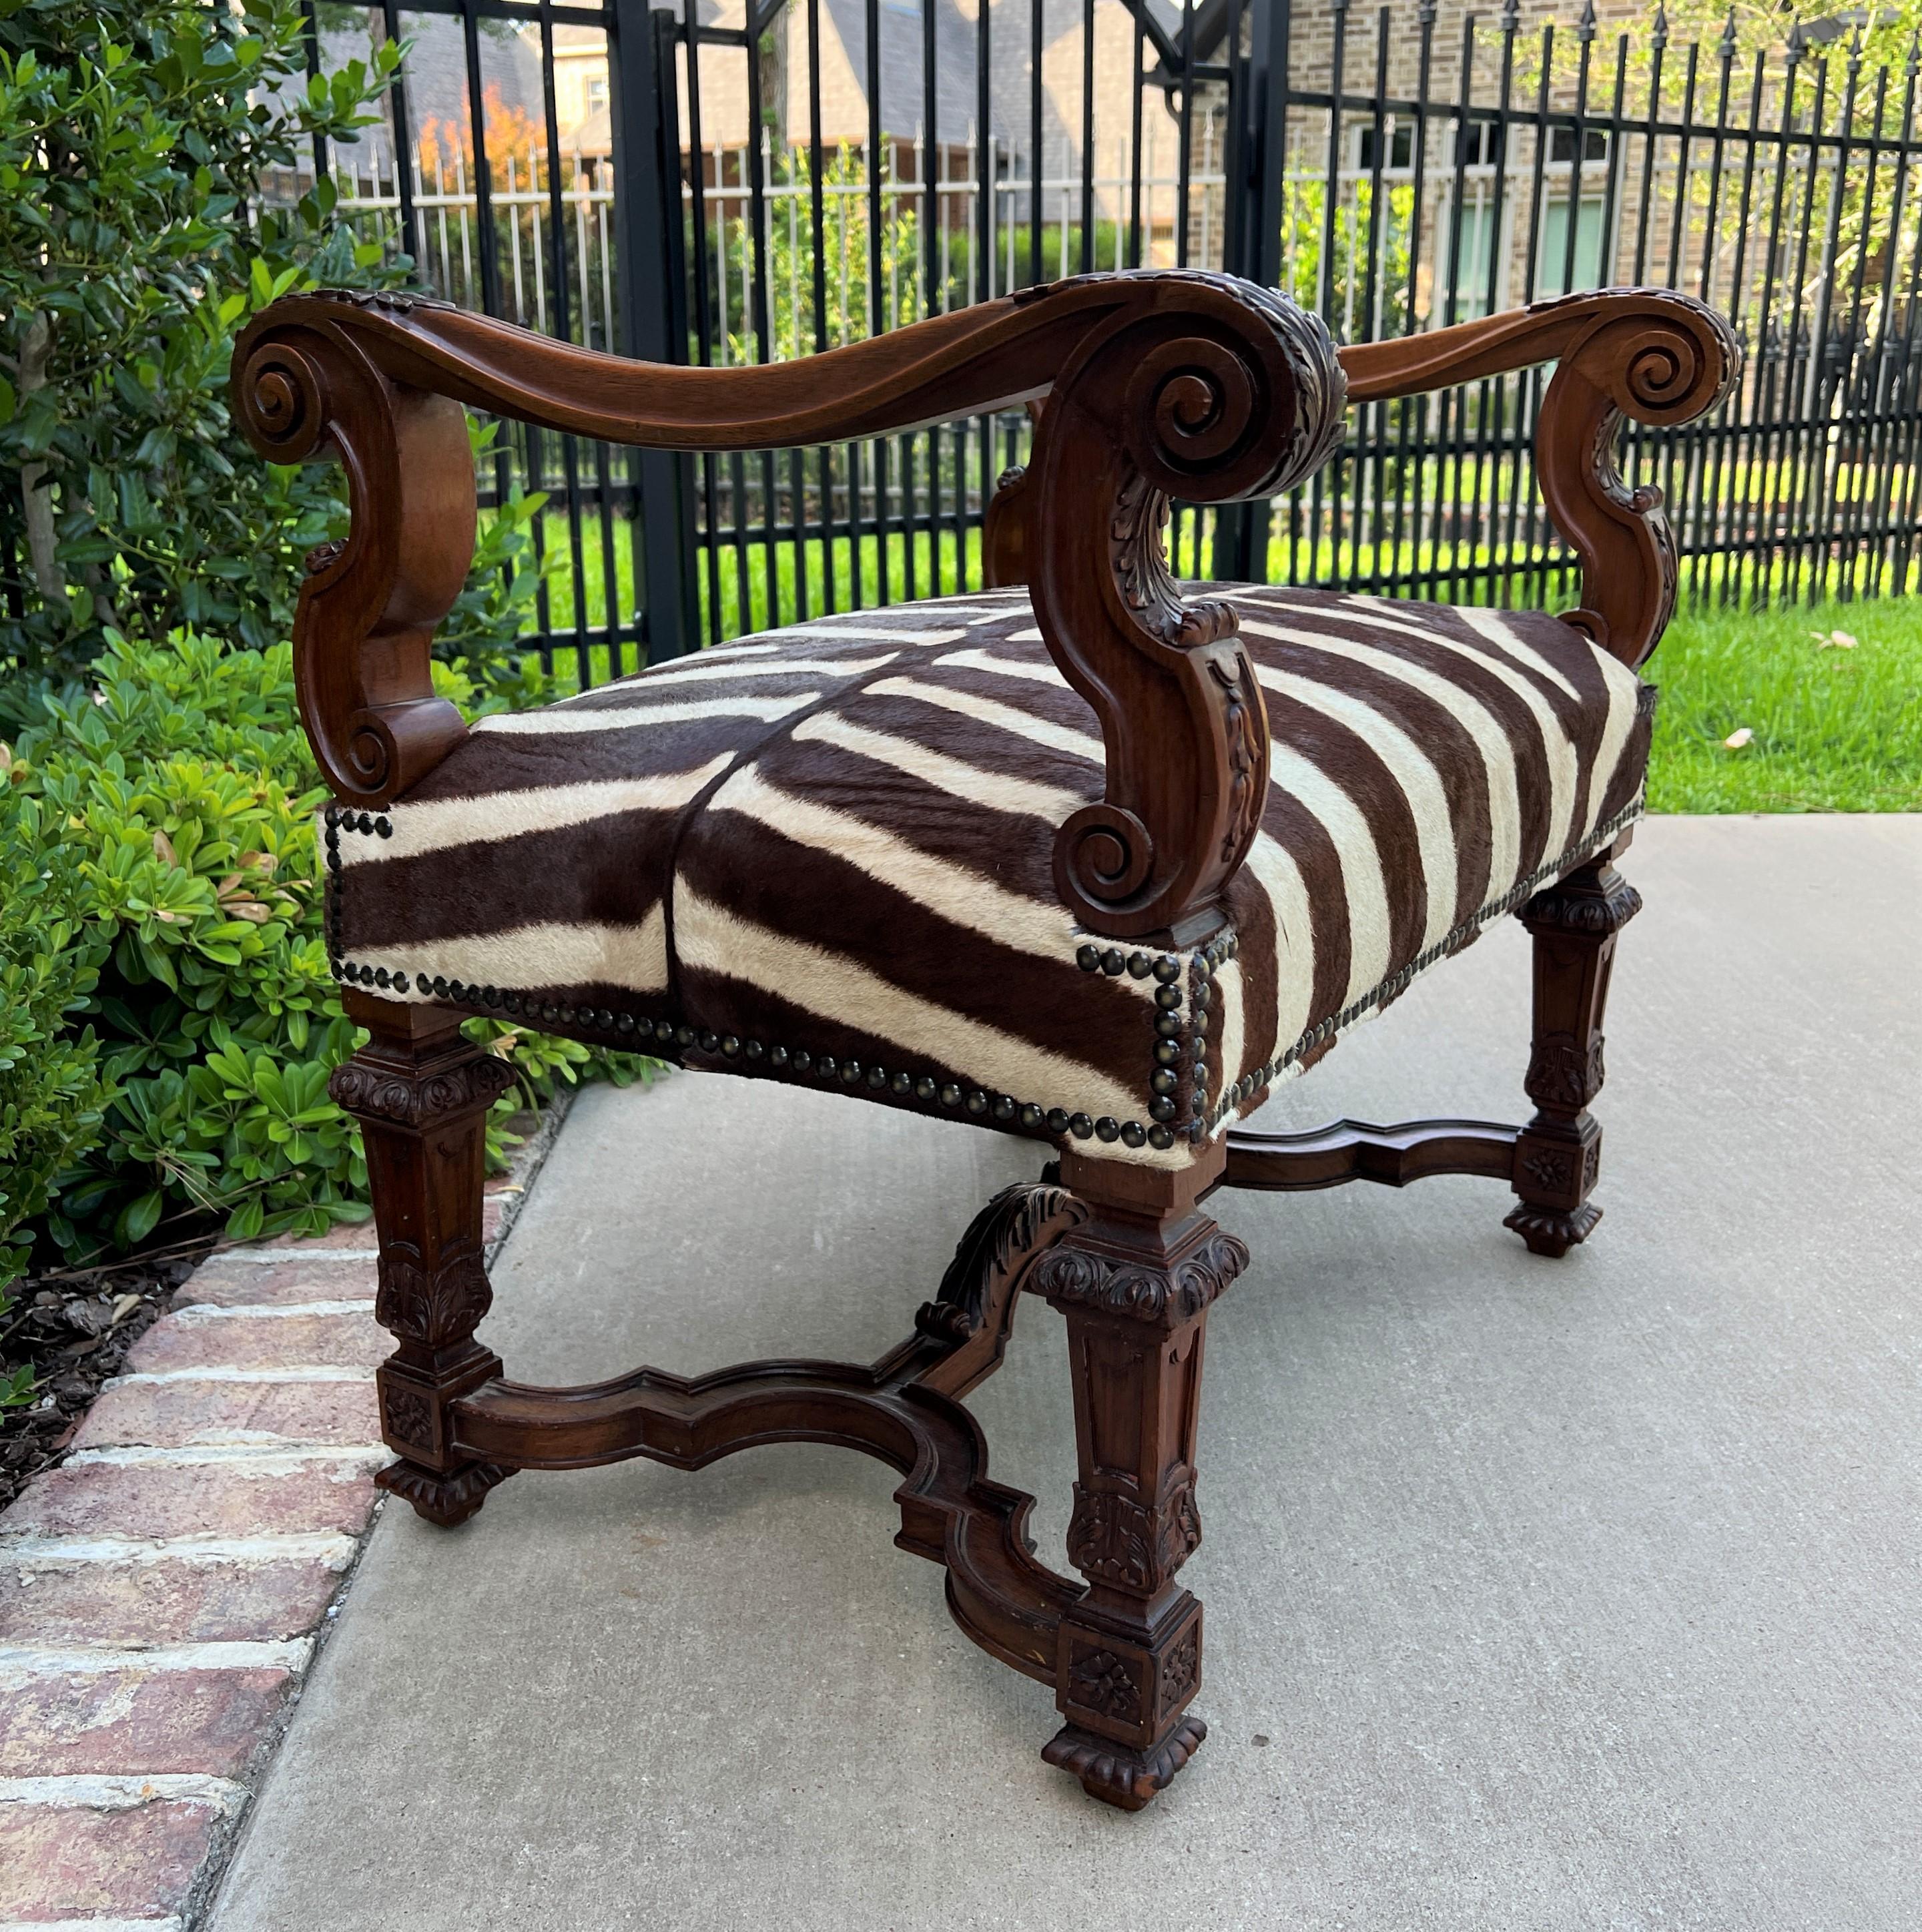 20th Century Antique French Bench Chair Settee Renaissance Revival Zebra Hide Walnut 19th C